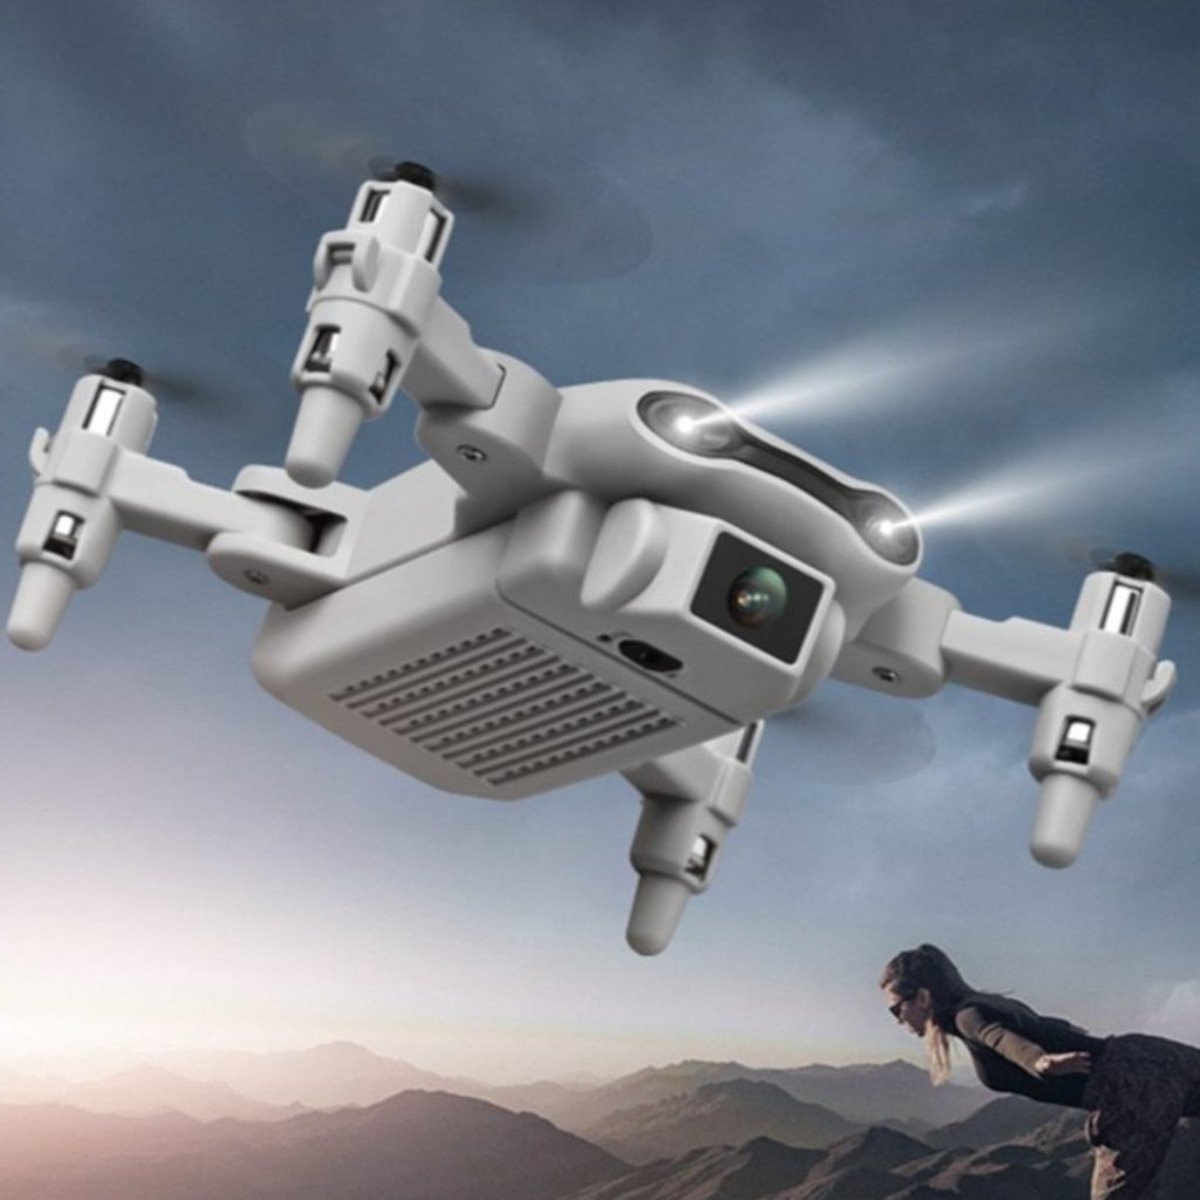 Ninja Dragon Vortex 9 RC Quadcopter Drone with Dual HD Camera